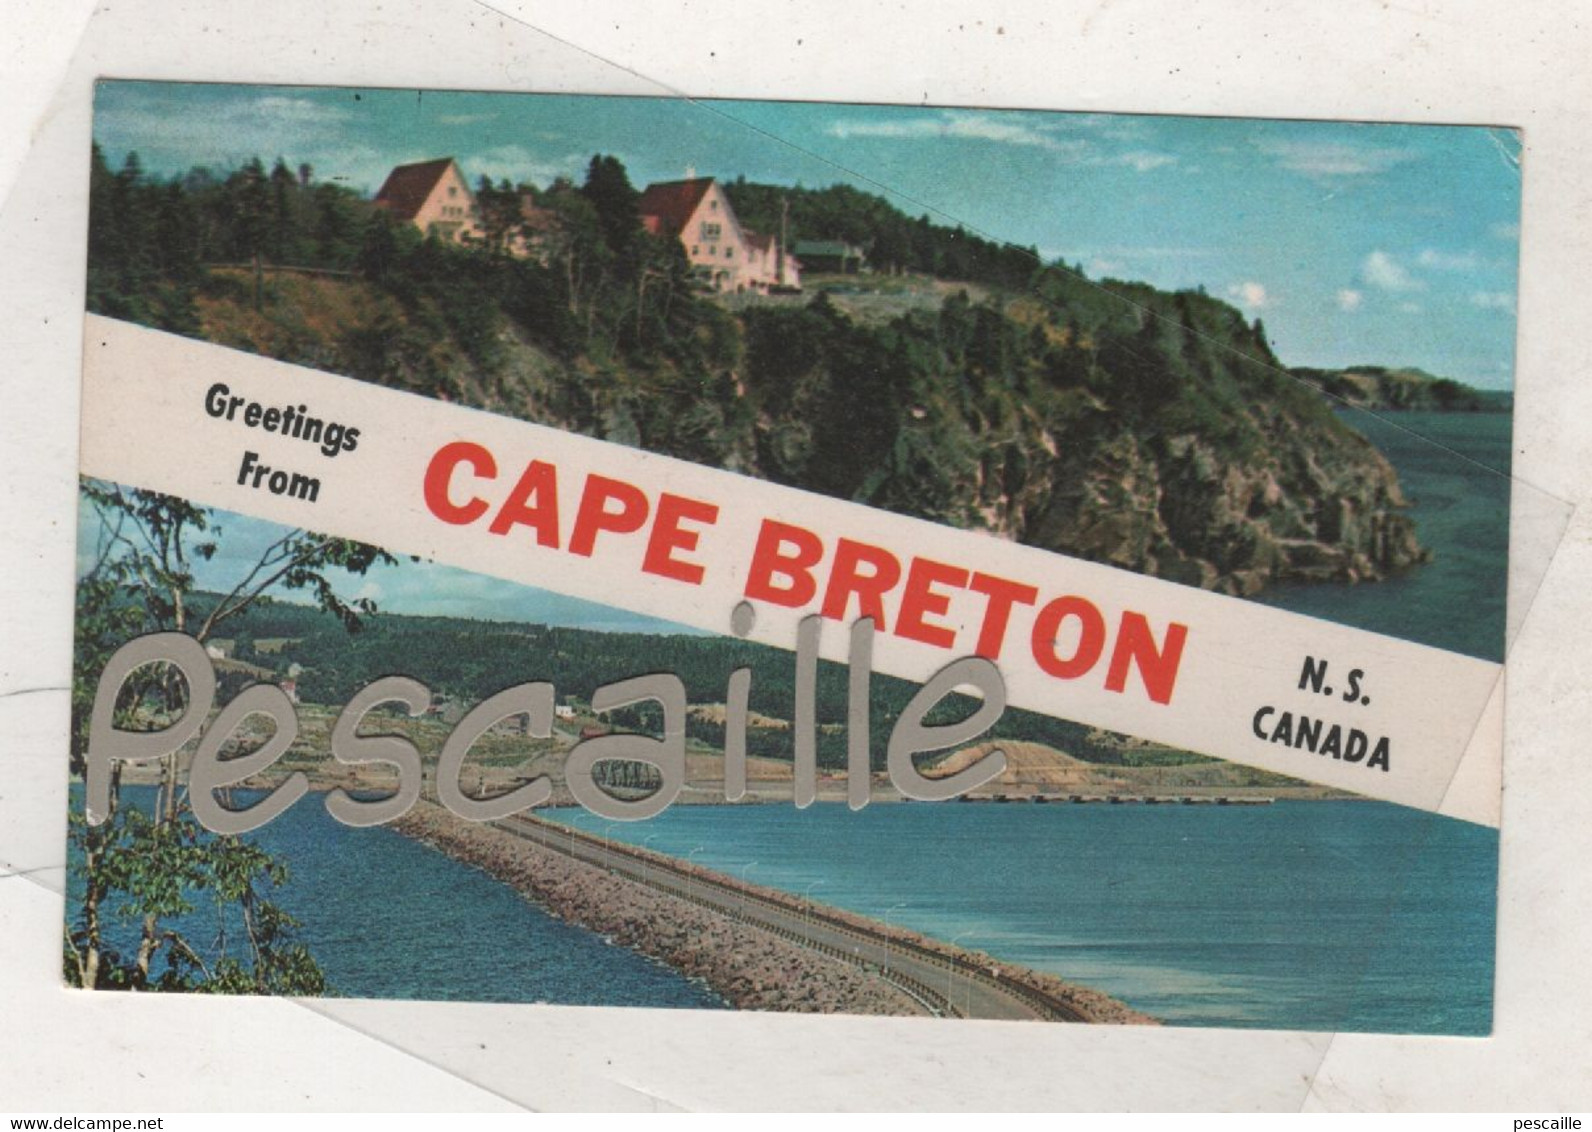 CANADA NEW SCOTLAND - CP GREETINGS FROM CAPE BRETON - C. & G. MACLEOD LTD SYDNEY N.S. CANADA - Cape Breton